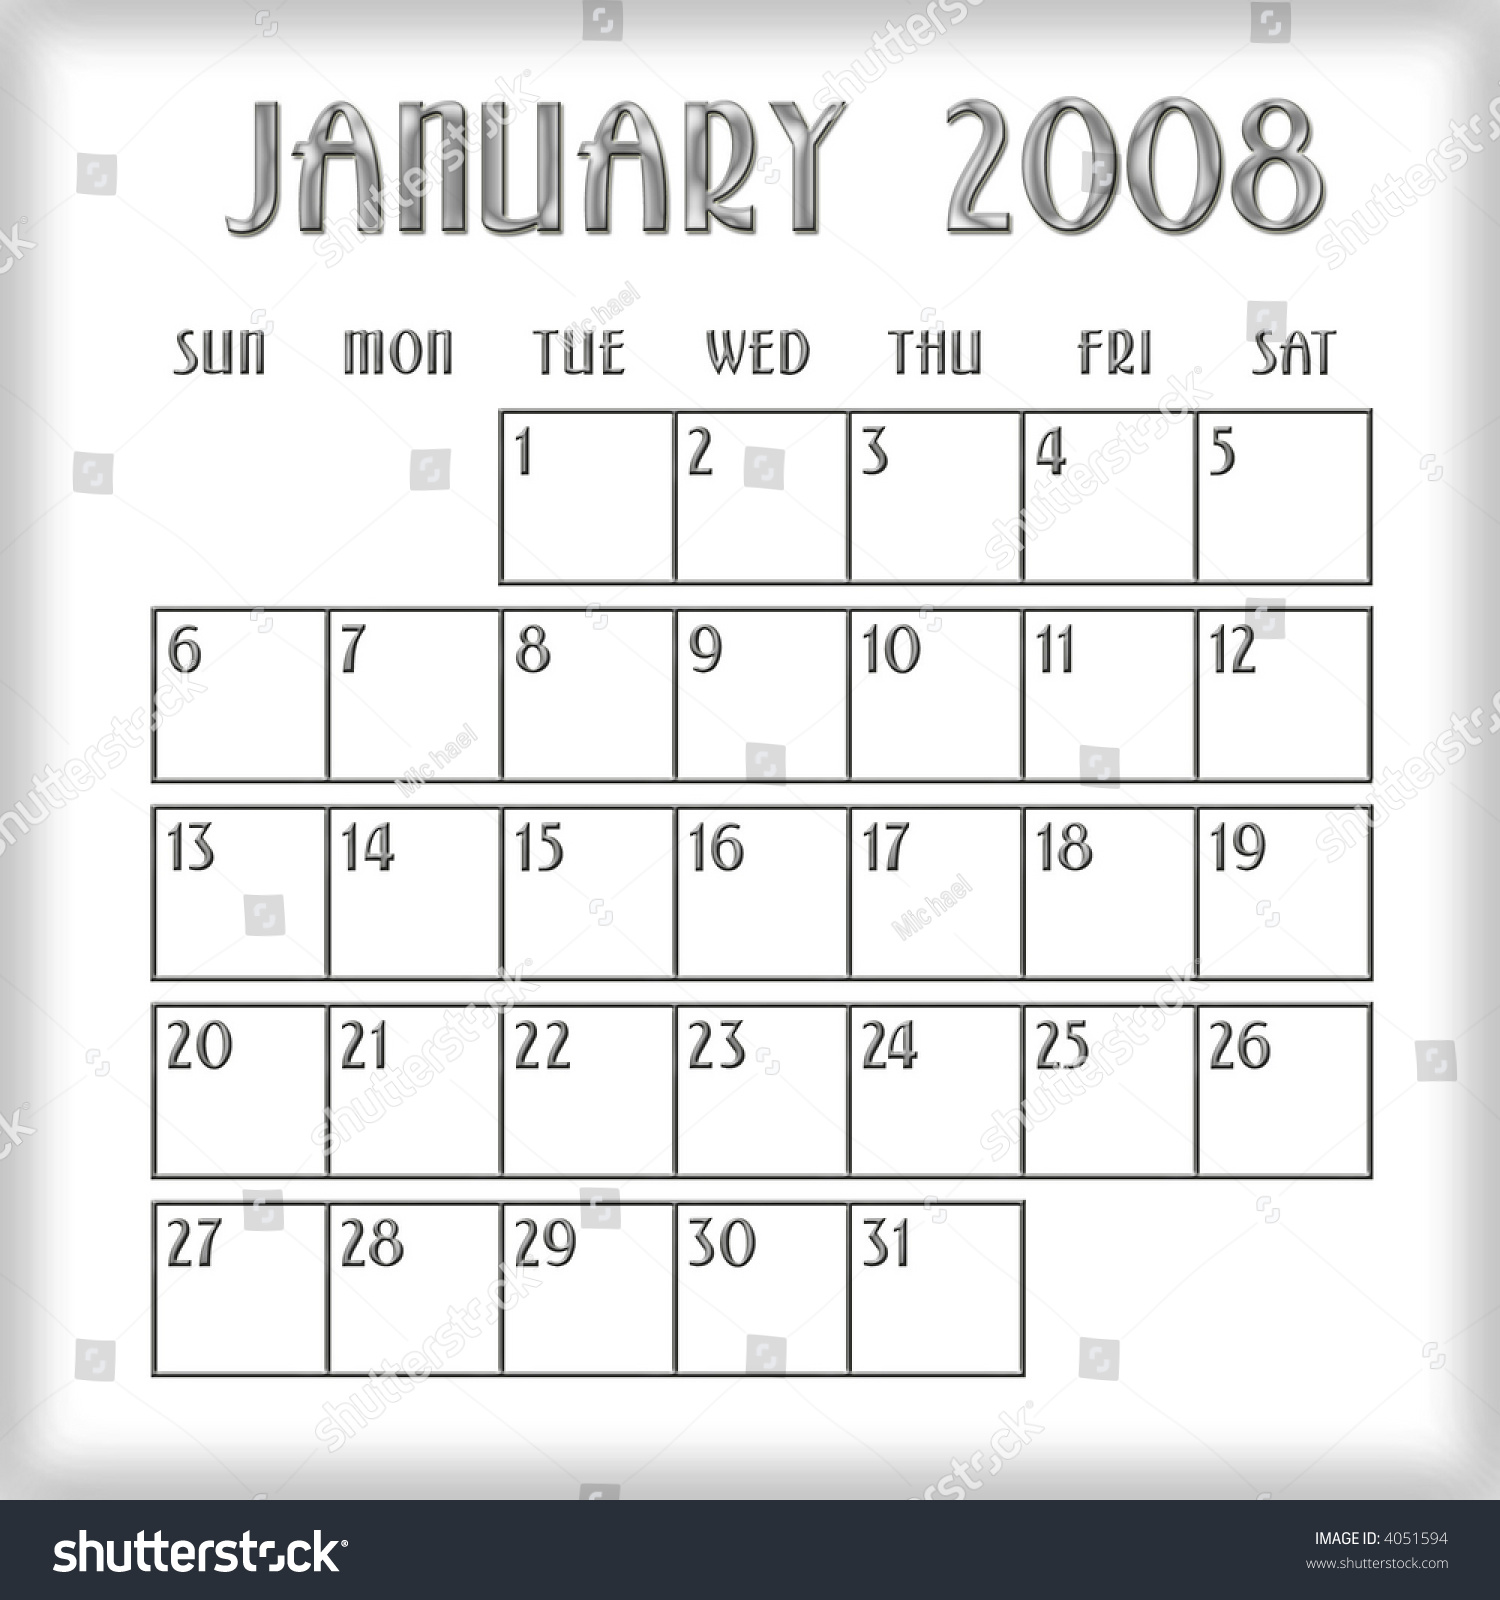 January 2008 printable blank calendar - Calendarprintables.net